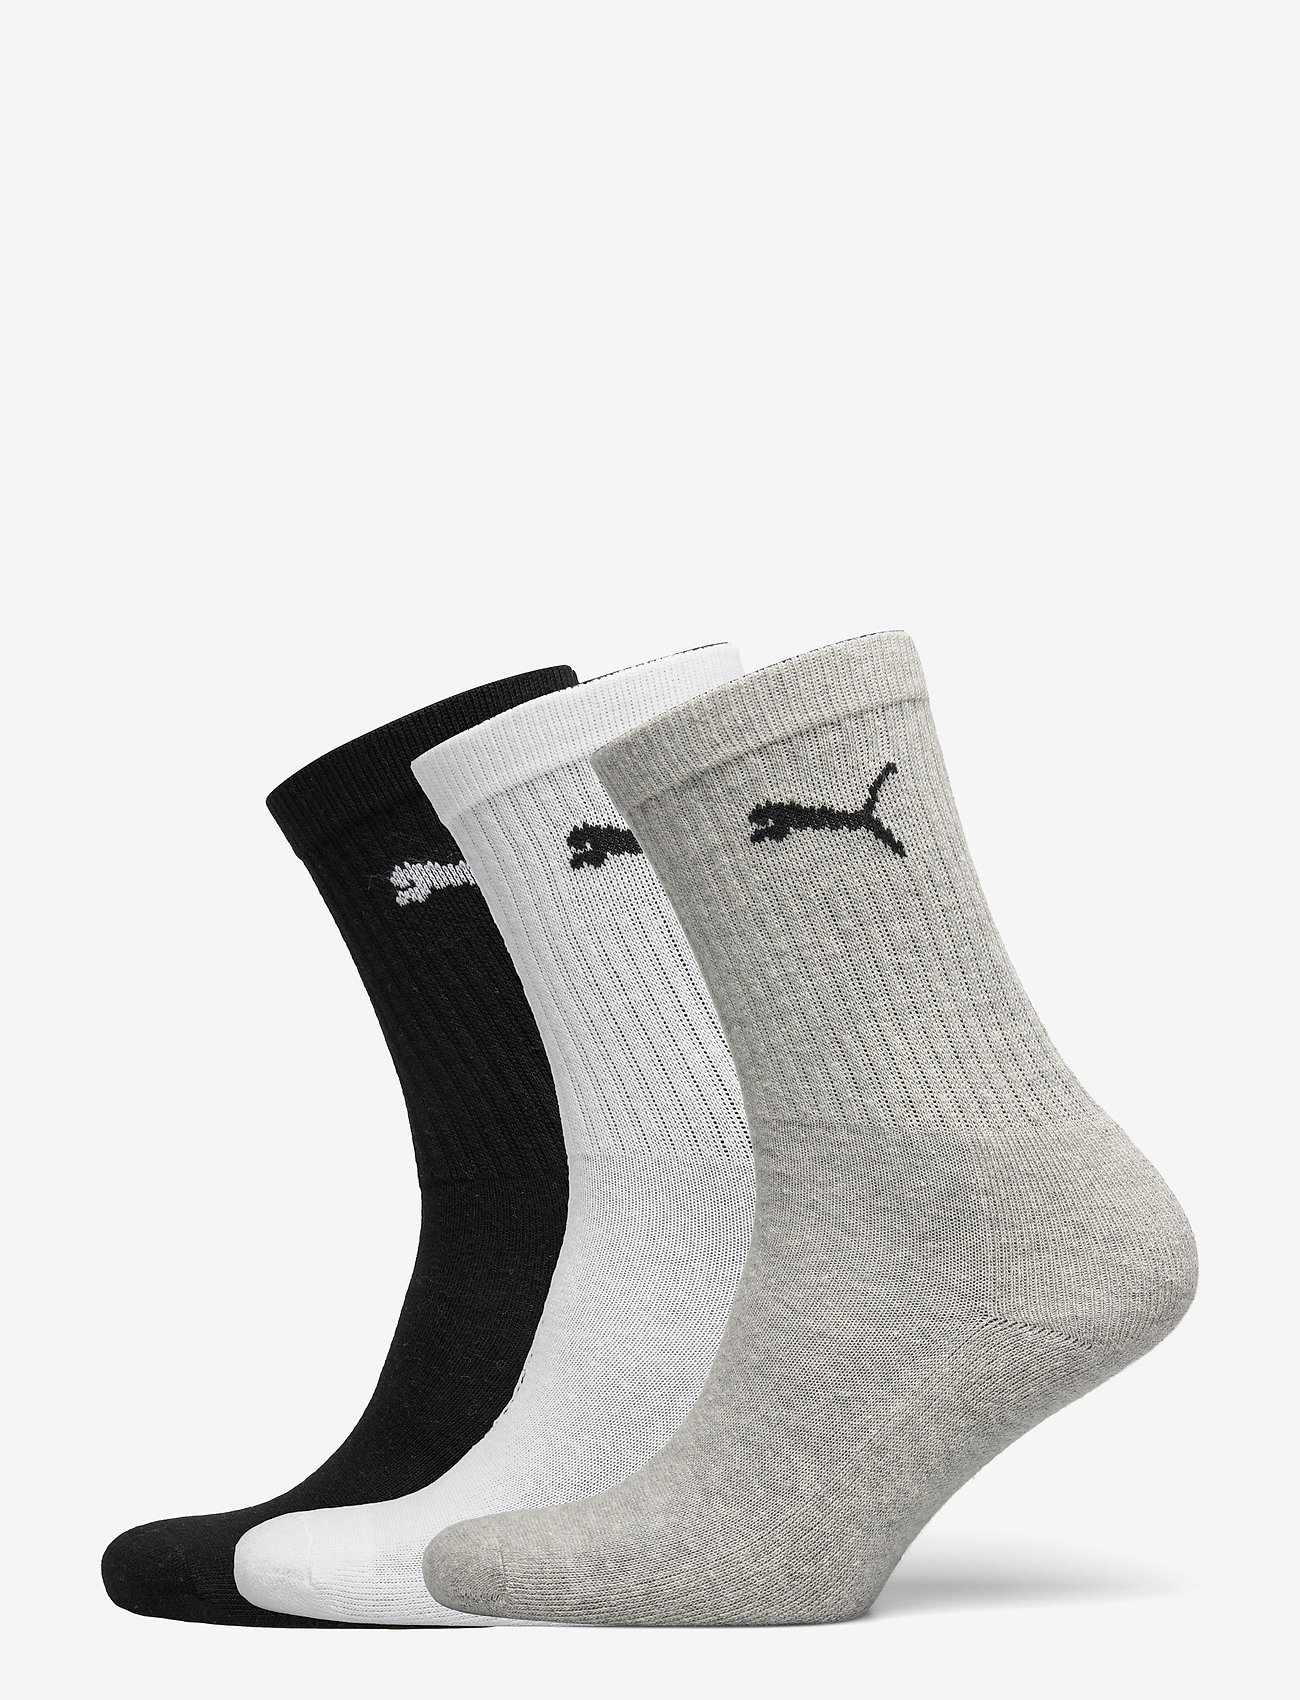 PUMA - PUMA JUNIOR CREW SOCK 3P - sokken - grey/white/black - 0